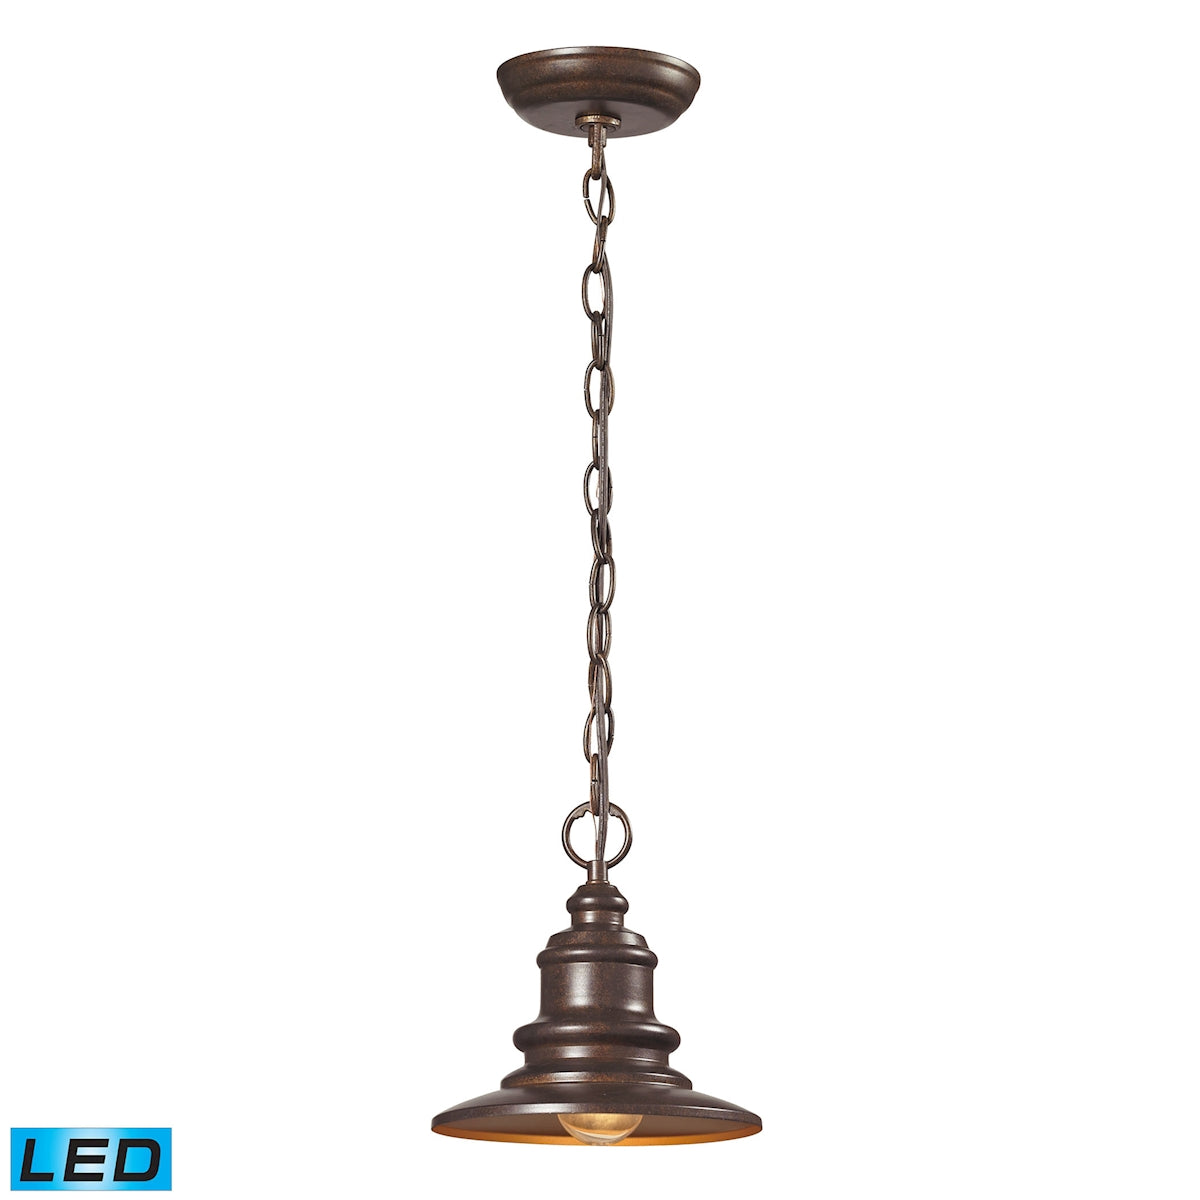 Marina 1-Light Outdoor Pendant in Hazelnut Bronze - Includes LED Bulb